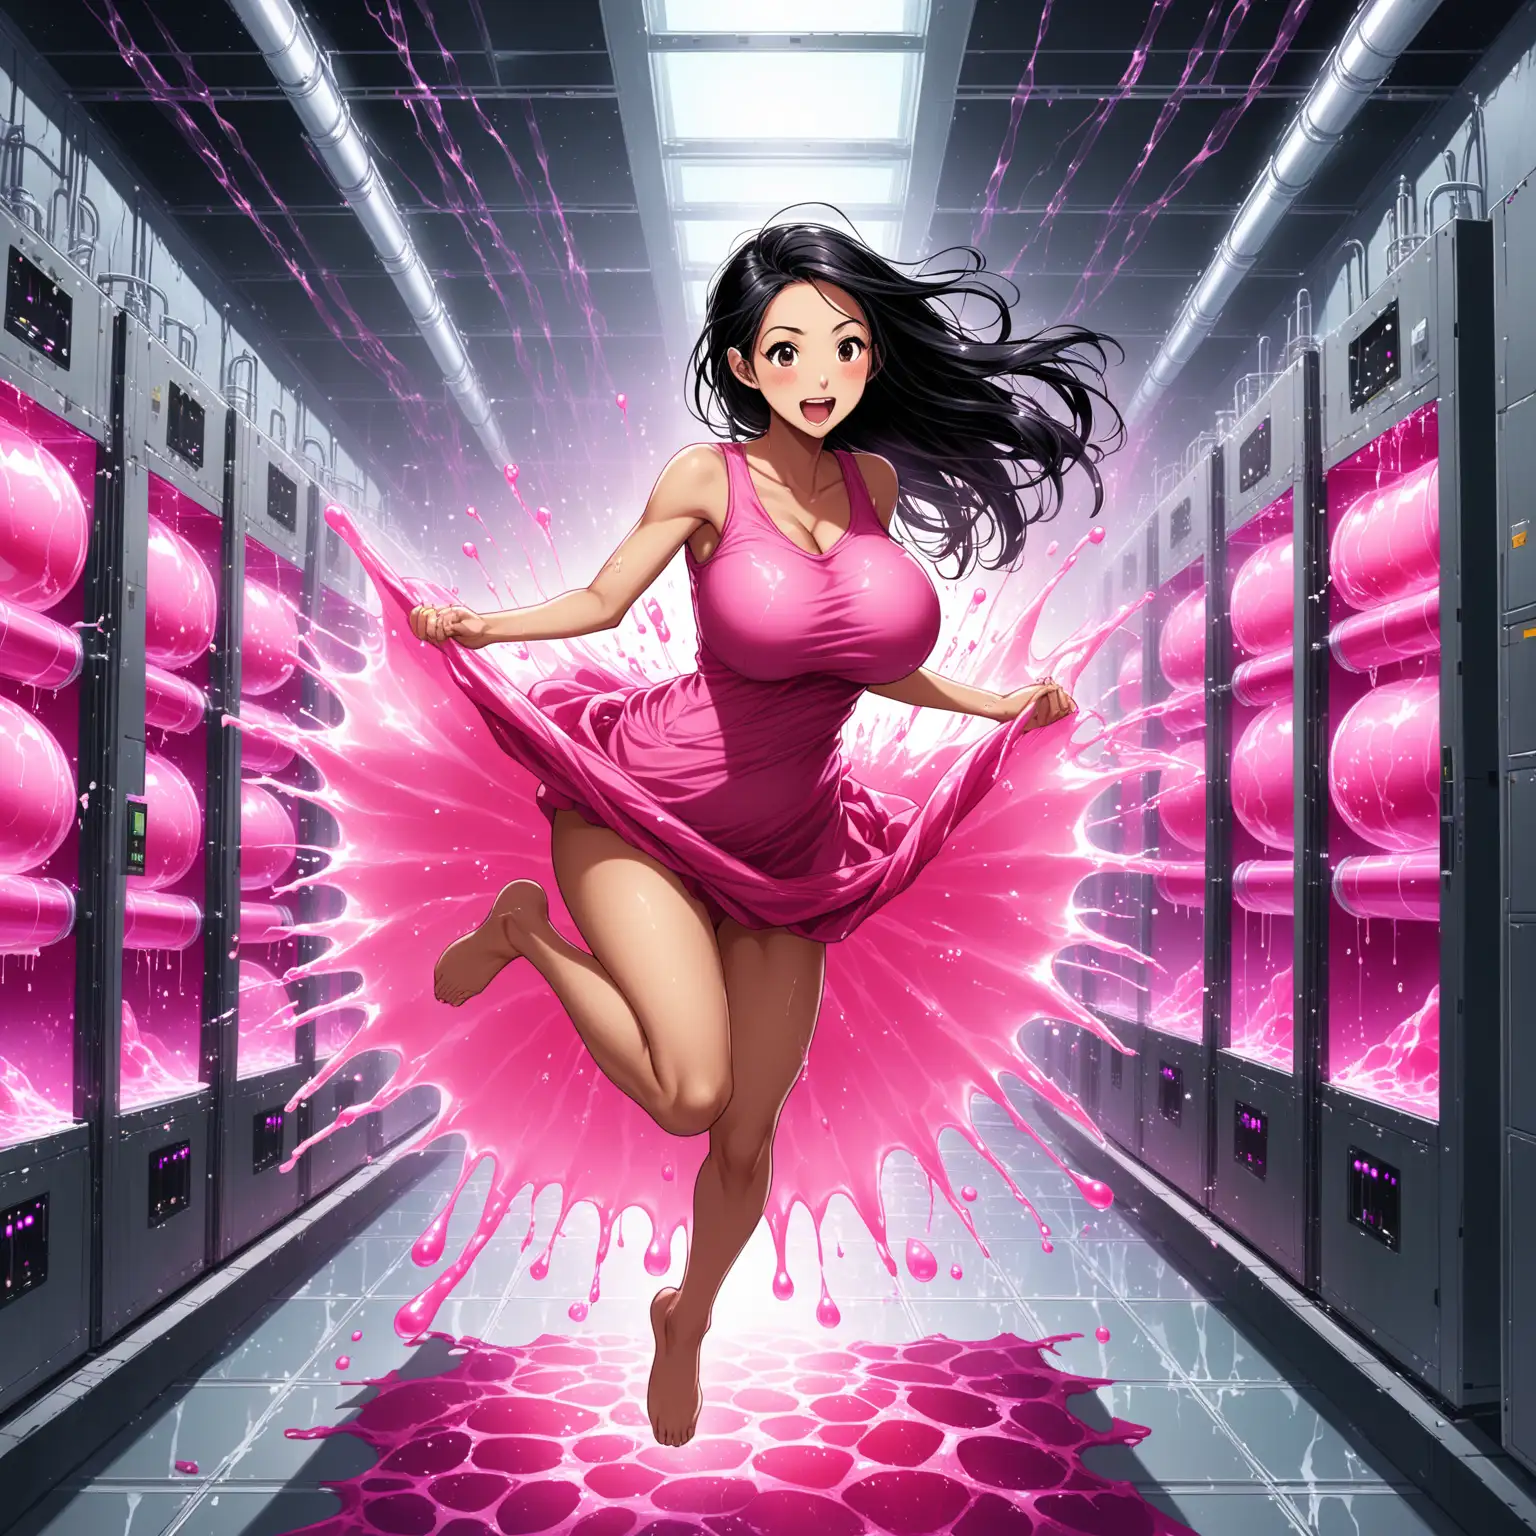 Energetic Indonesian Woman in Pink Mutating Material Dress in Spaceship Laboratory